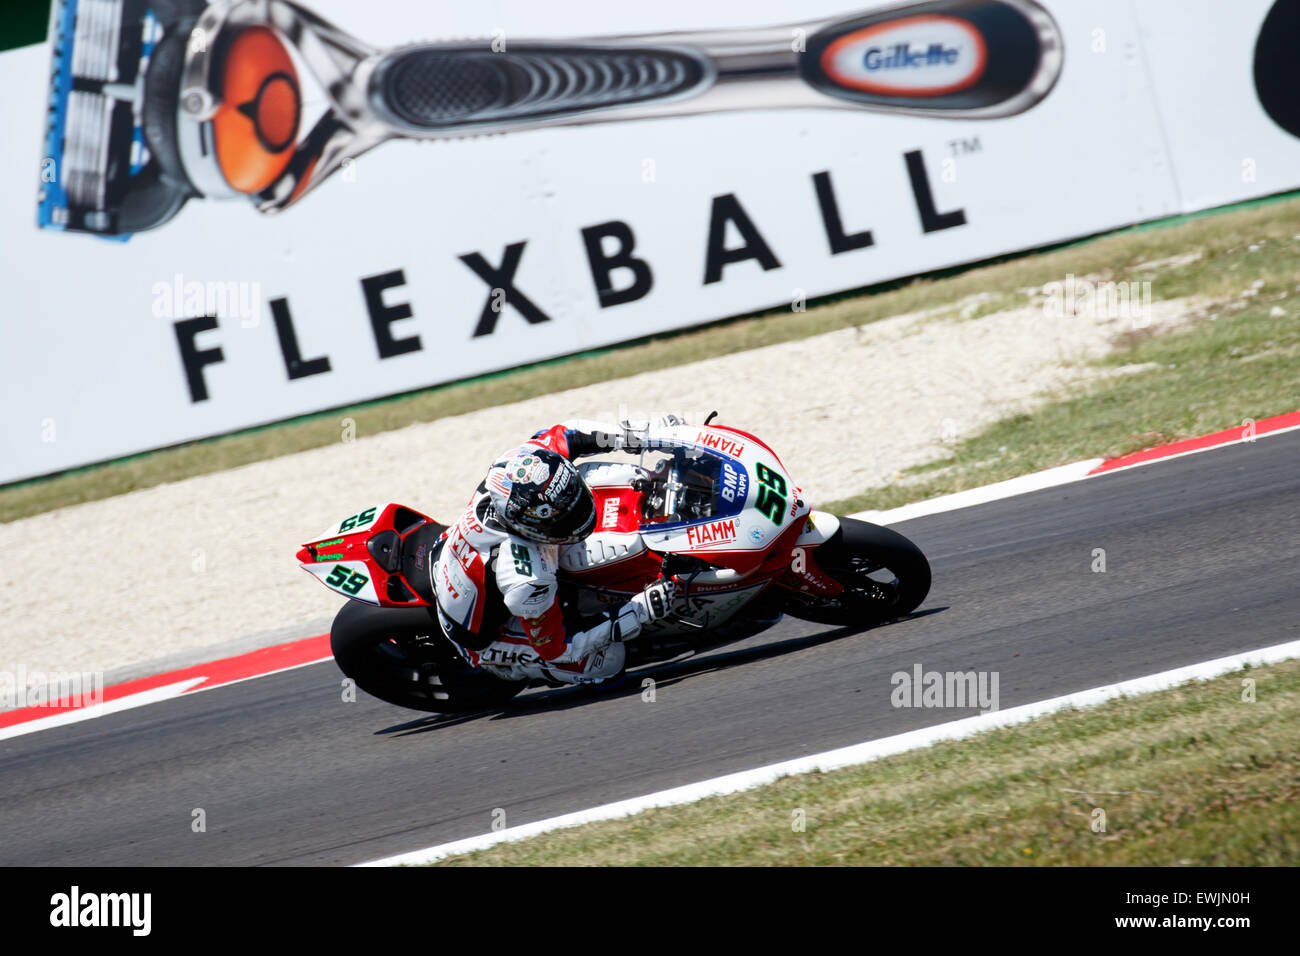 Misano Adriatico, Italy - June 20, 2015: Ducati Panigale R of Althea Racing Team, driven by CANEPA Niccolò Stock Photo